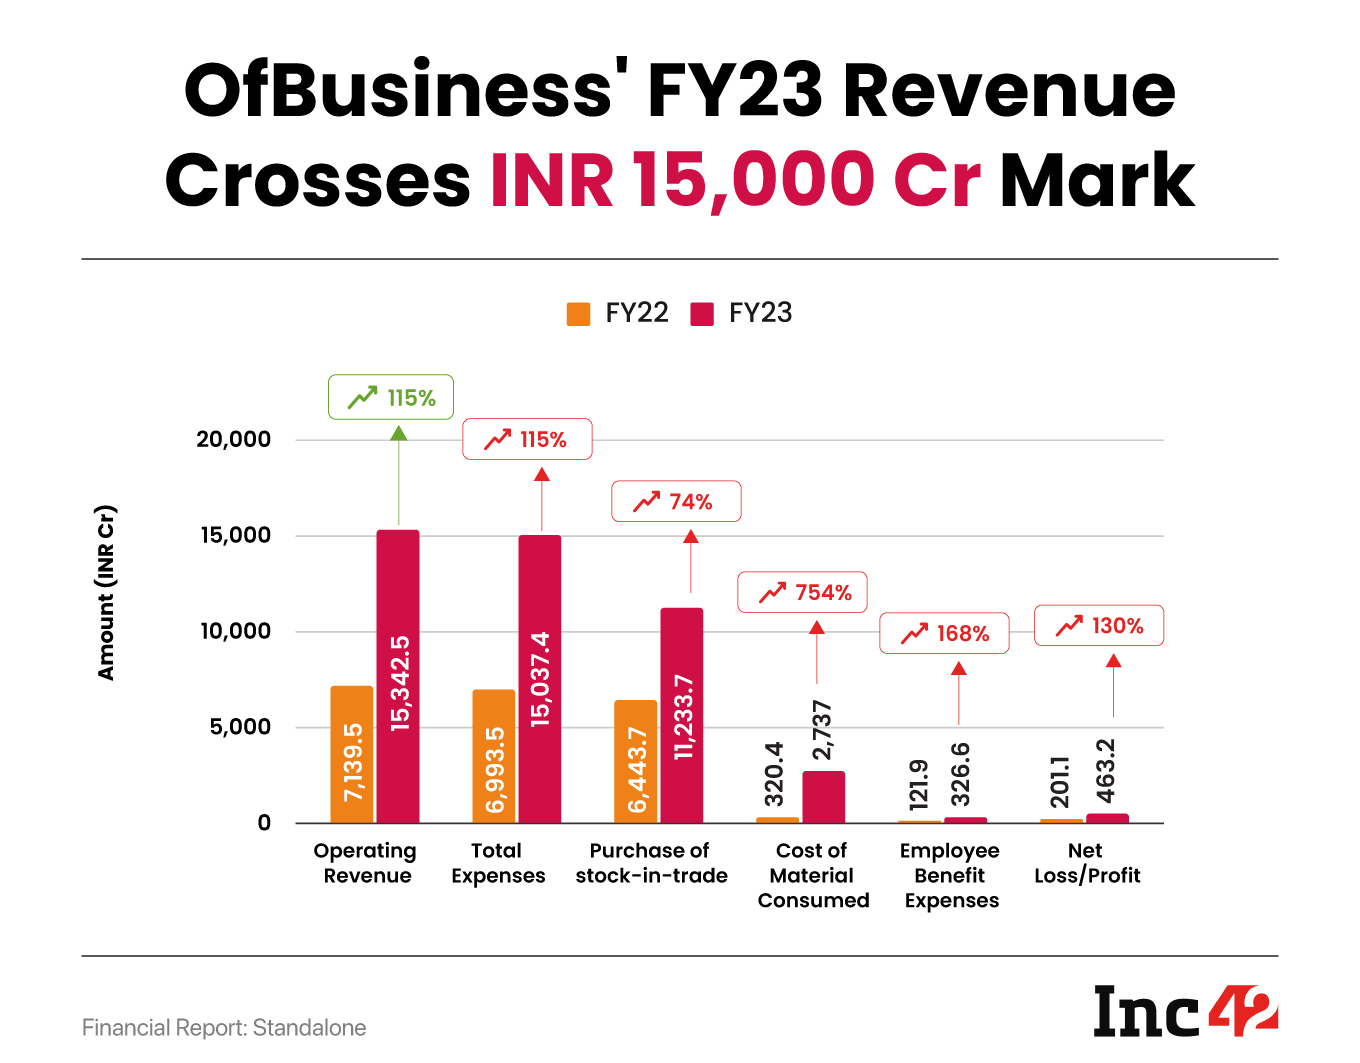 OfBusiness Posts INR 463 Cr Profit In FY23, Revenue Crosses INR 15,000 Cr Mark